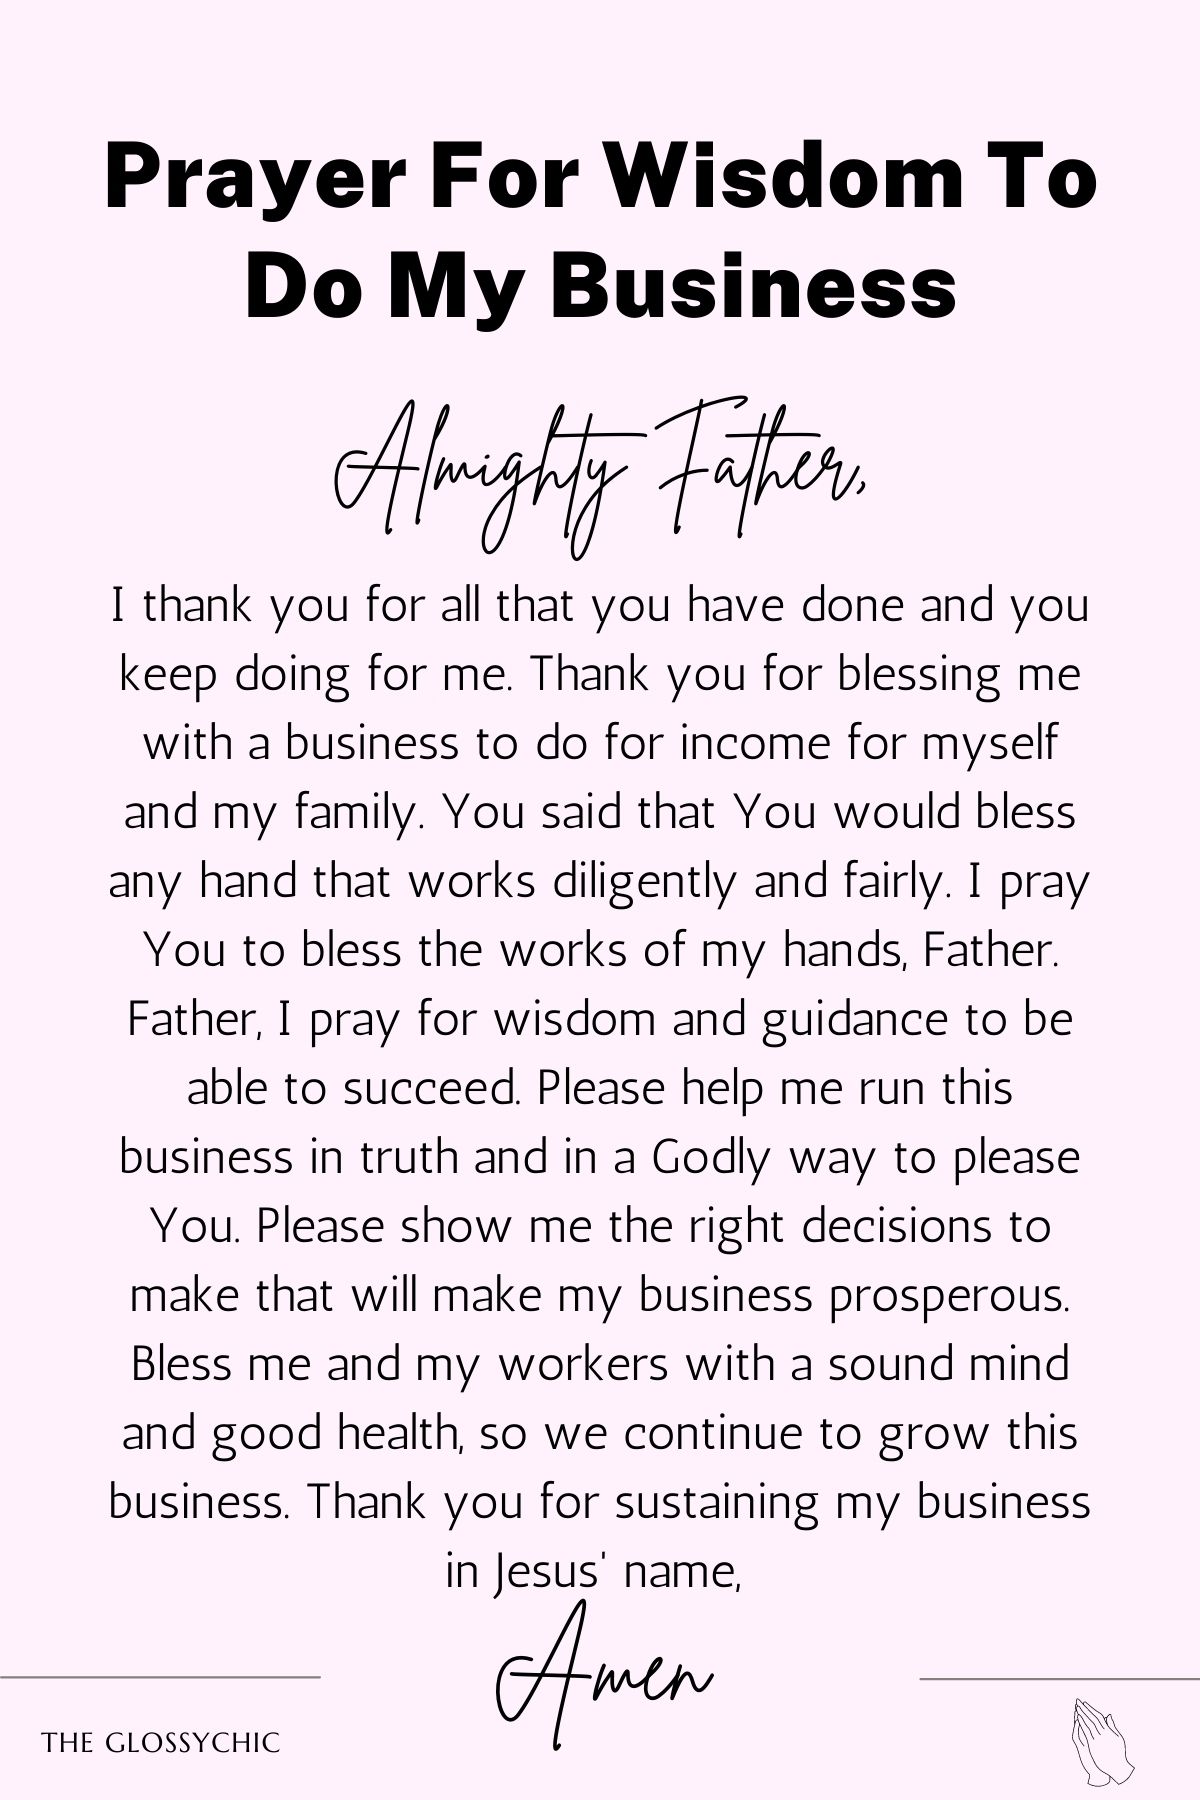 Prayer for wisdom to do my business